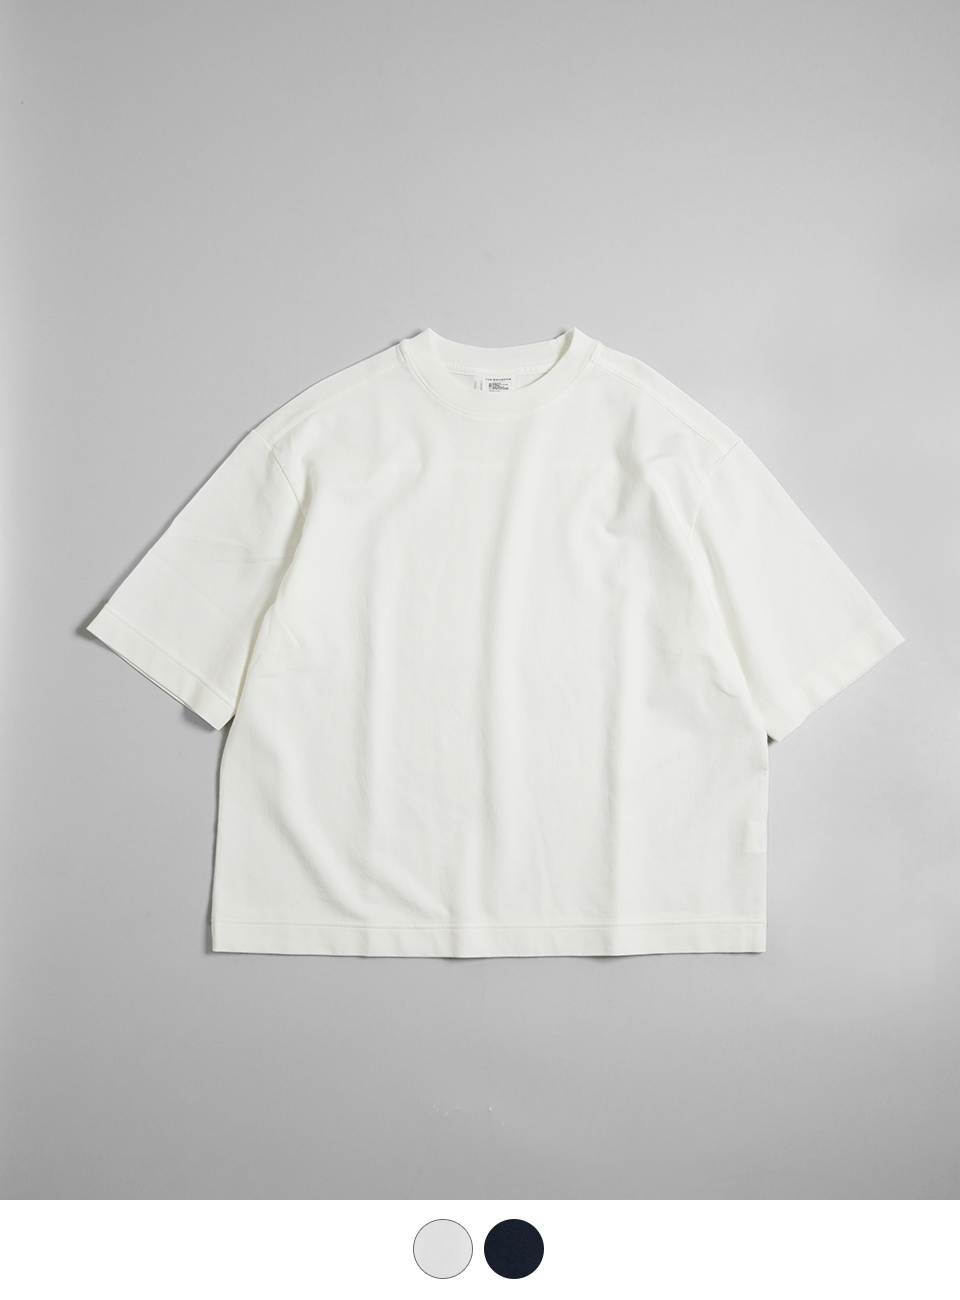 THE SHINZONE シンゾーン スマート Tシャツ SMART TEE SHIRT カットソー 24SMSCU20【送料無料】【クーポン対象外】